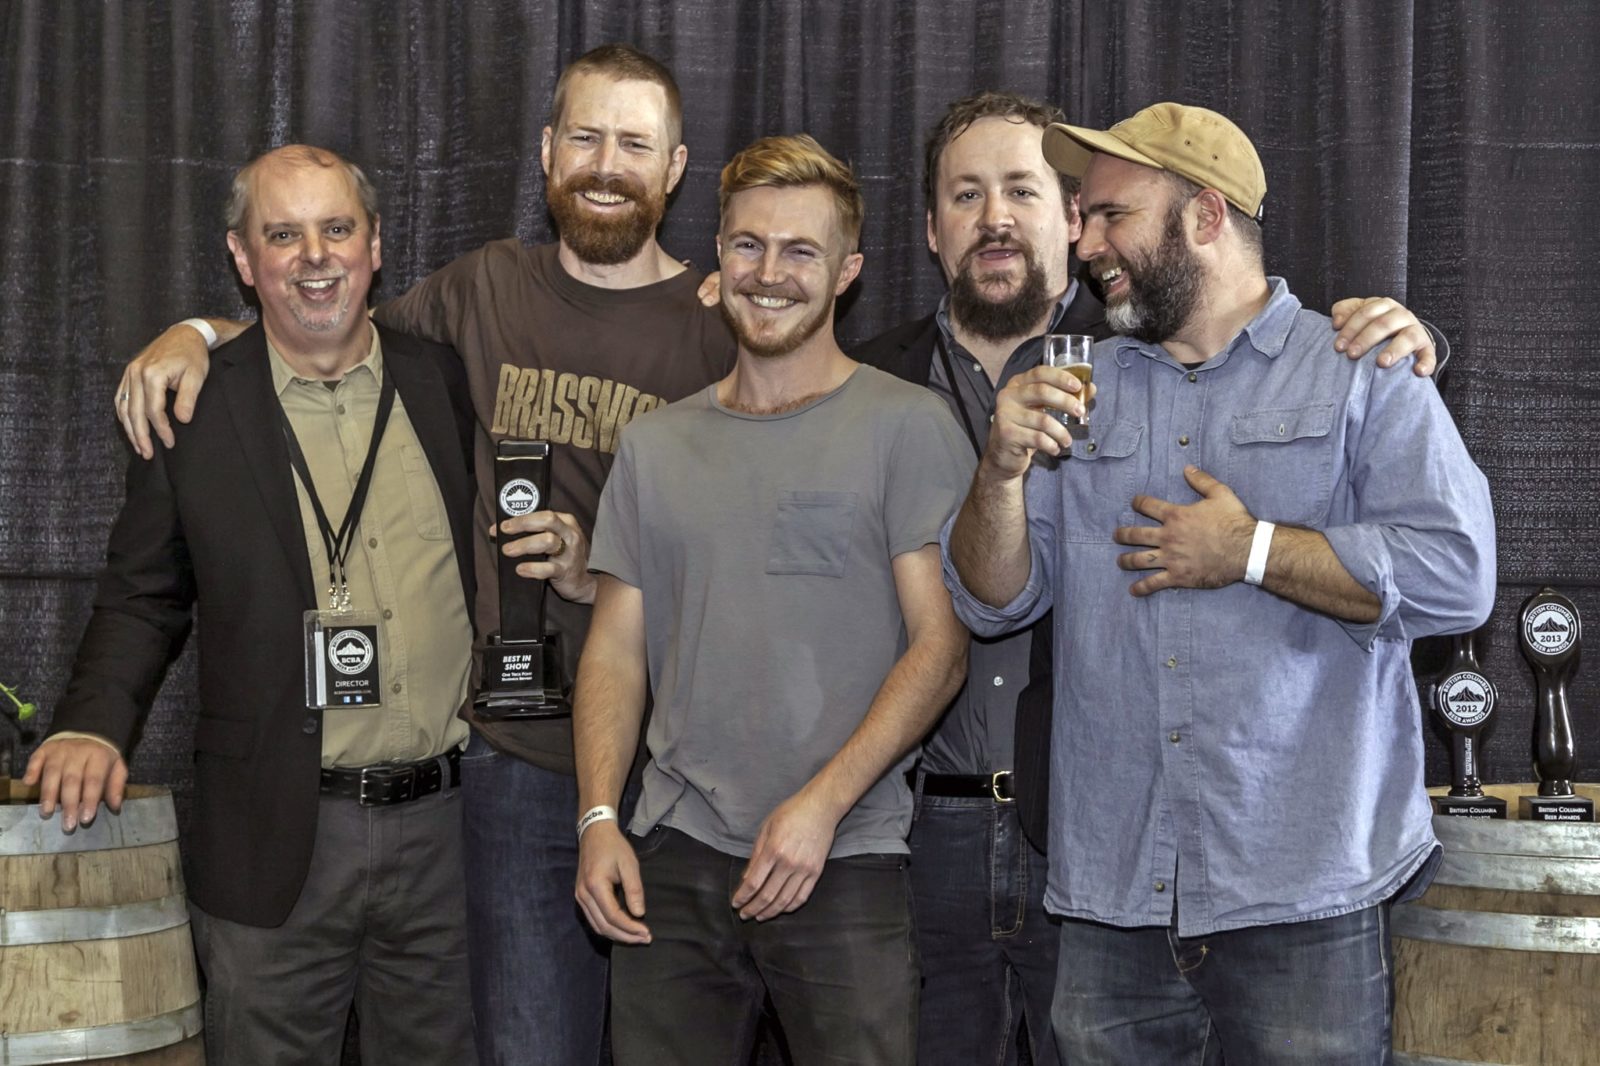 Photo courtesy of BC Beer Awards